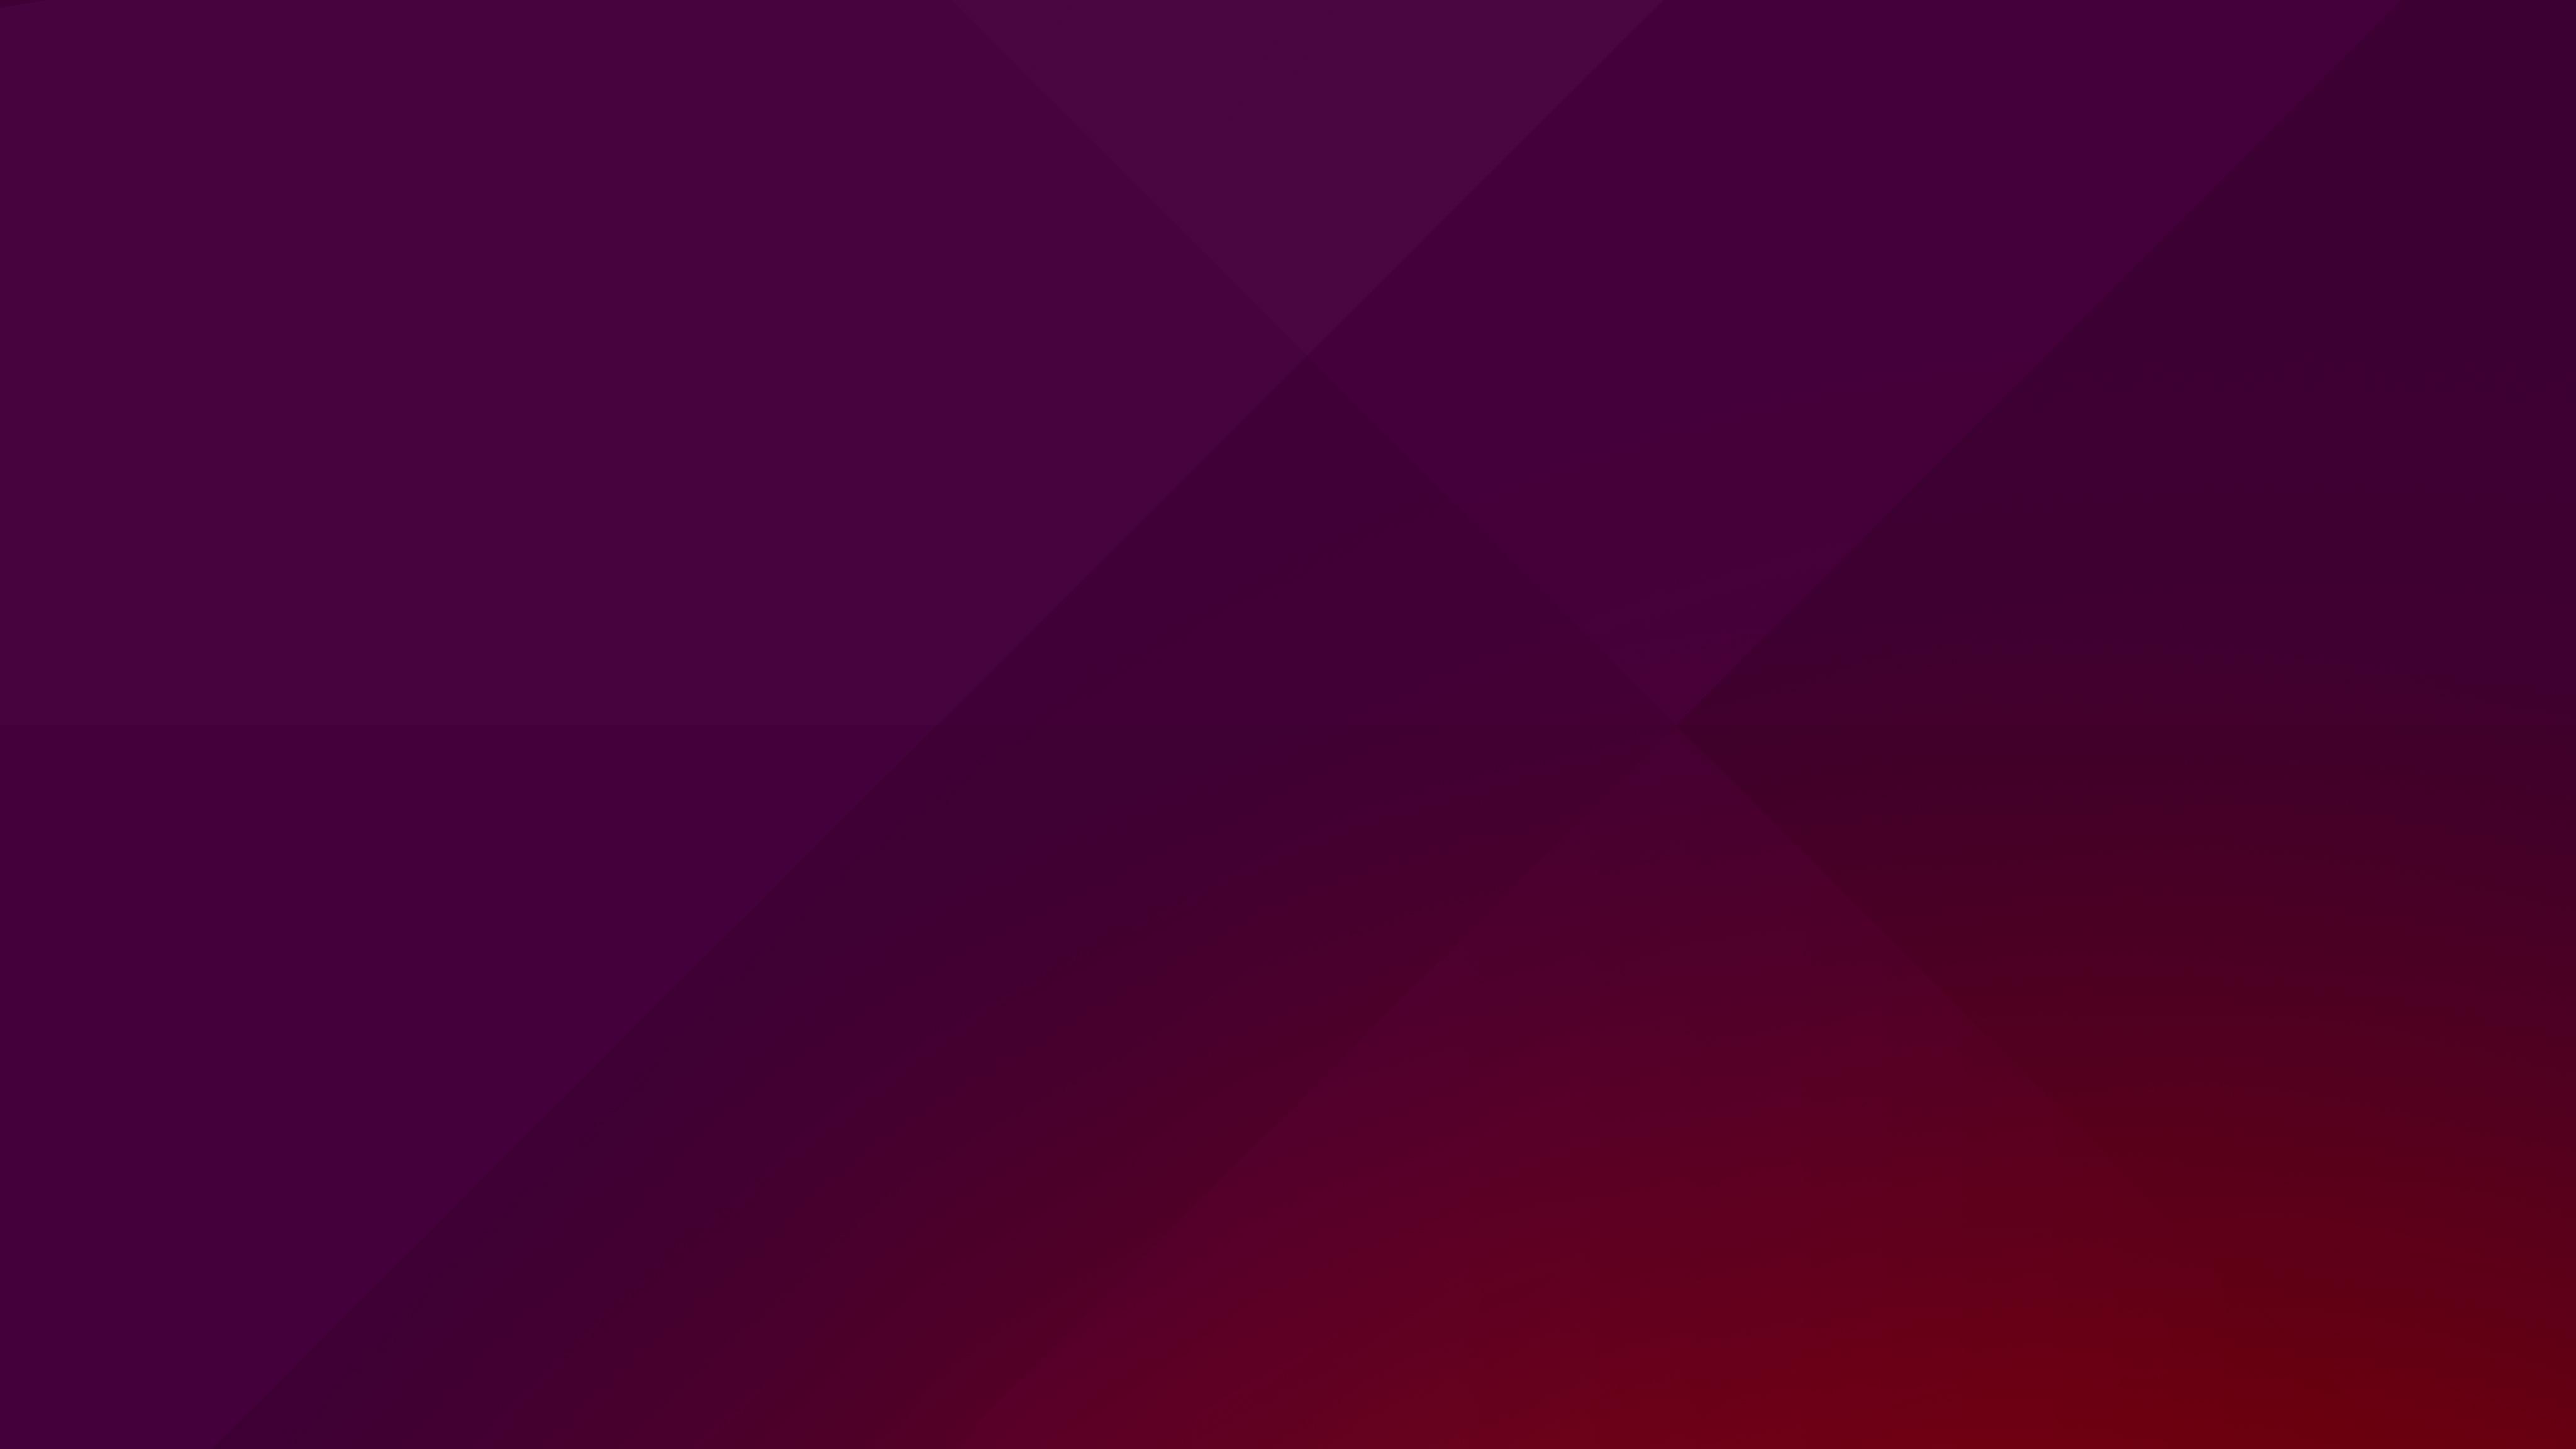 4096 x 2304 · jpeg - This Is The New Ubuntu 15.04 Wallpaper